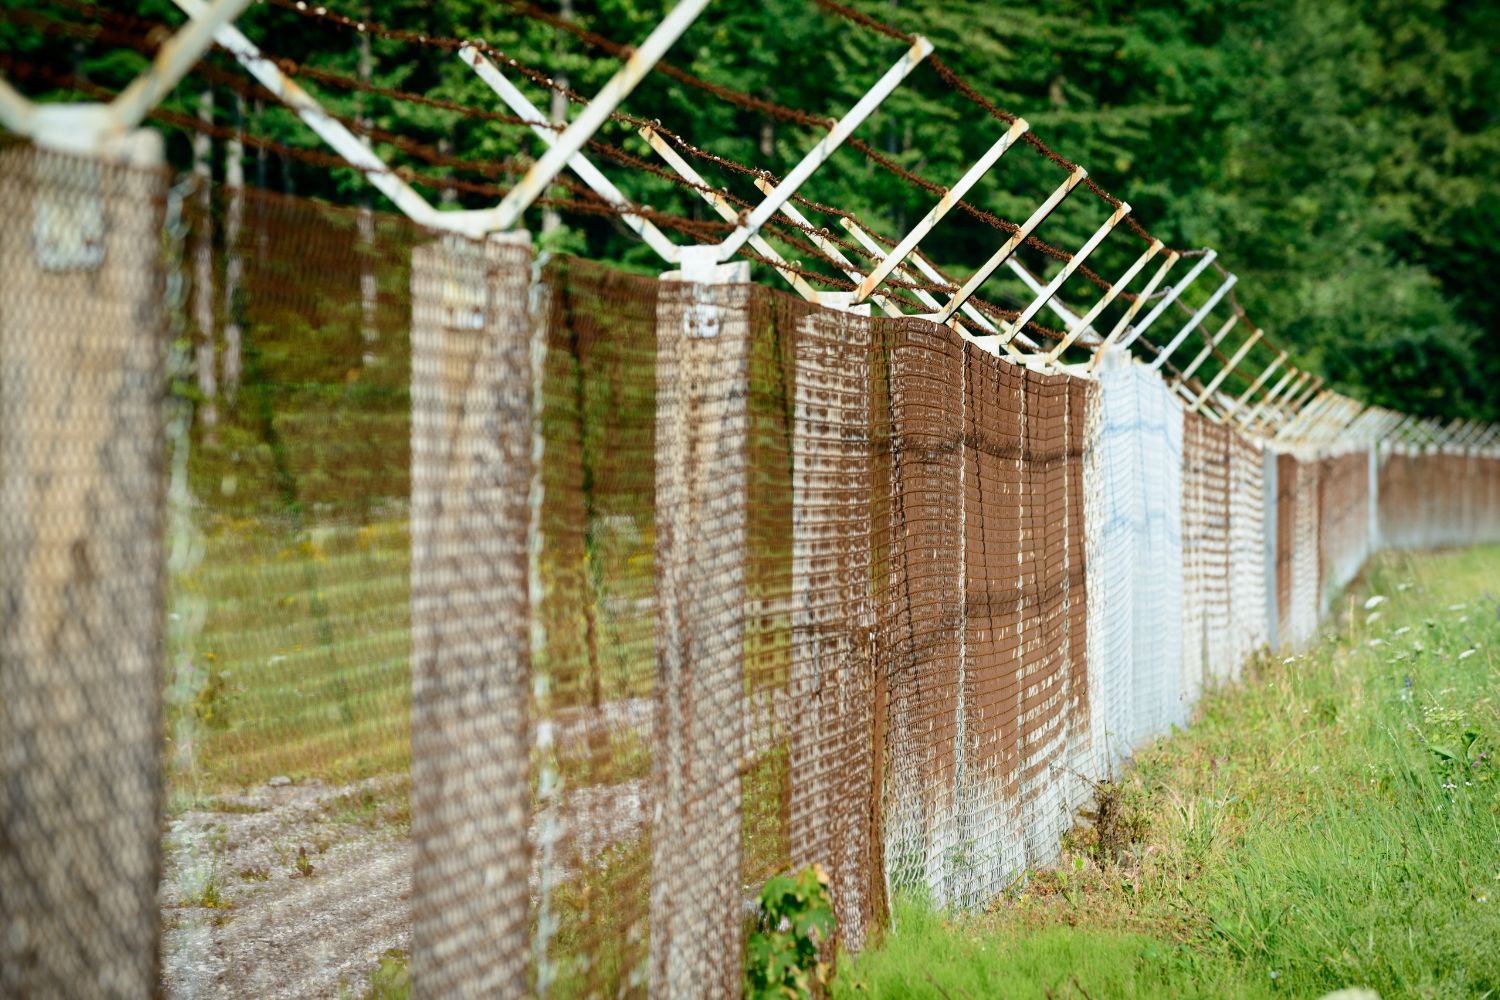 Portable noise barriers such as perimeter fences